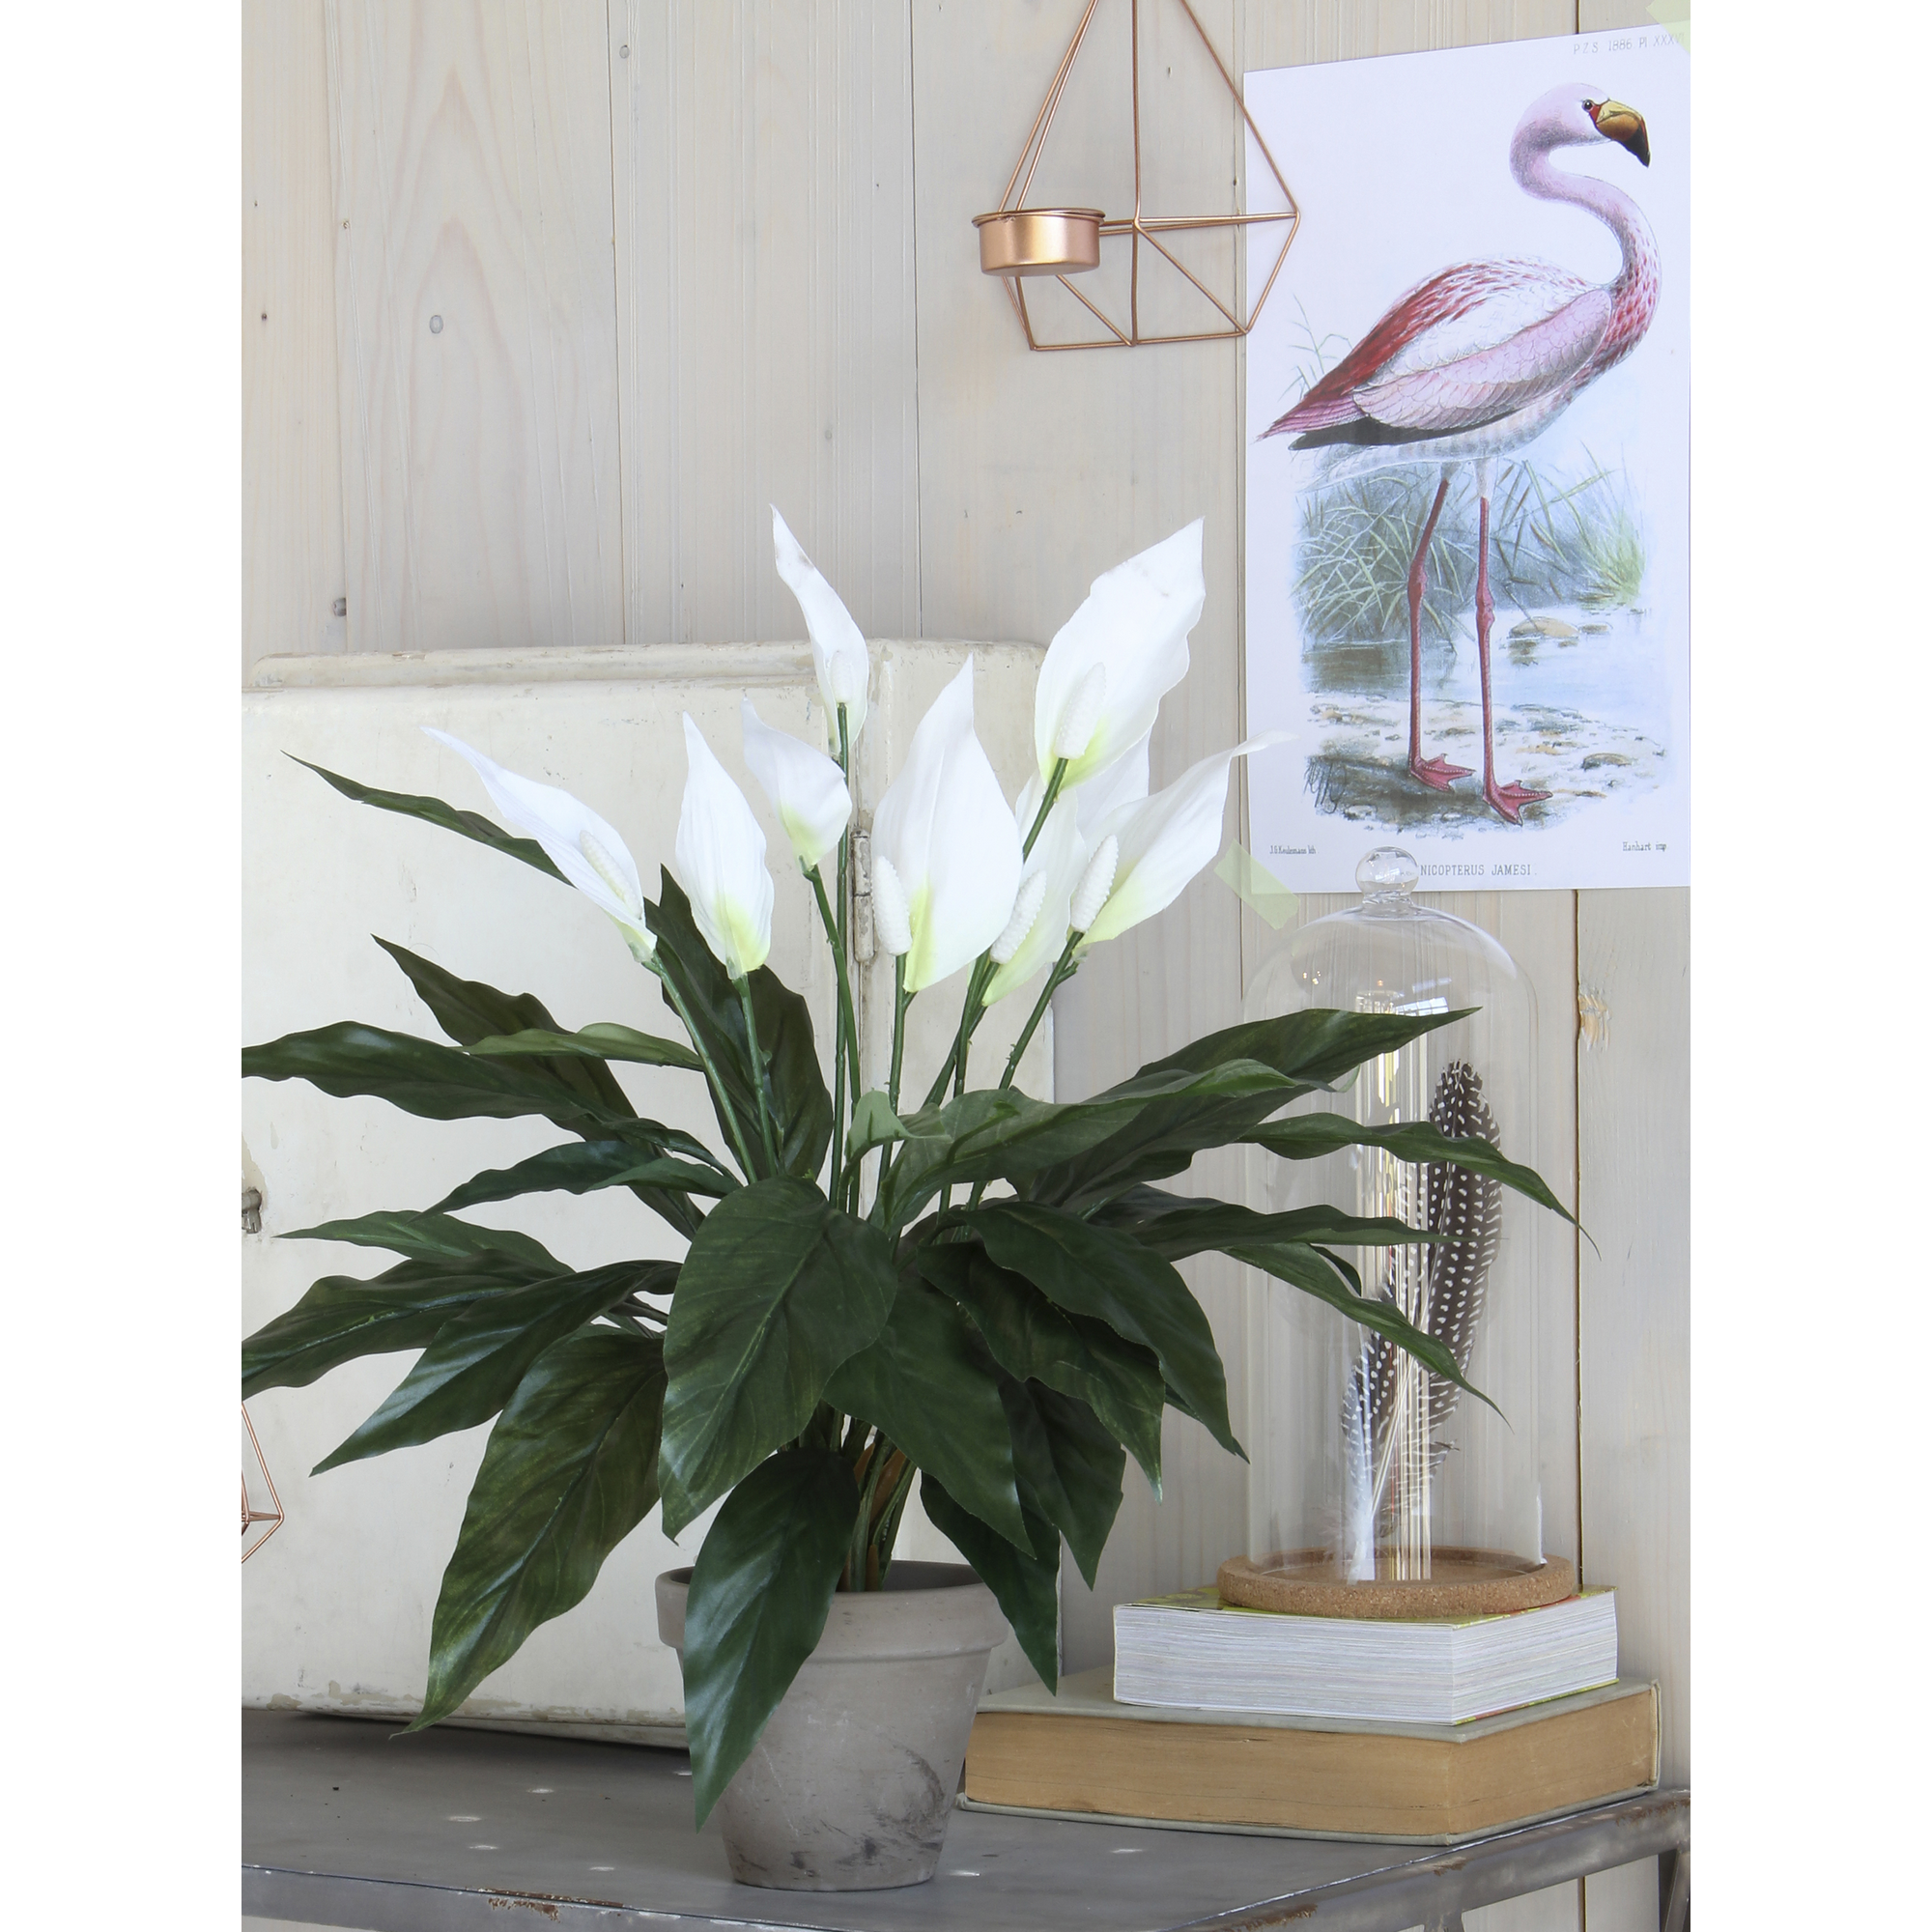 Kunstpalme Spathiphyllum weiß/grün im Topf 11,5 x 50 x 40 cm + product picture